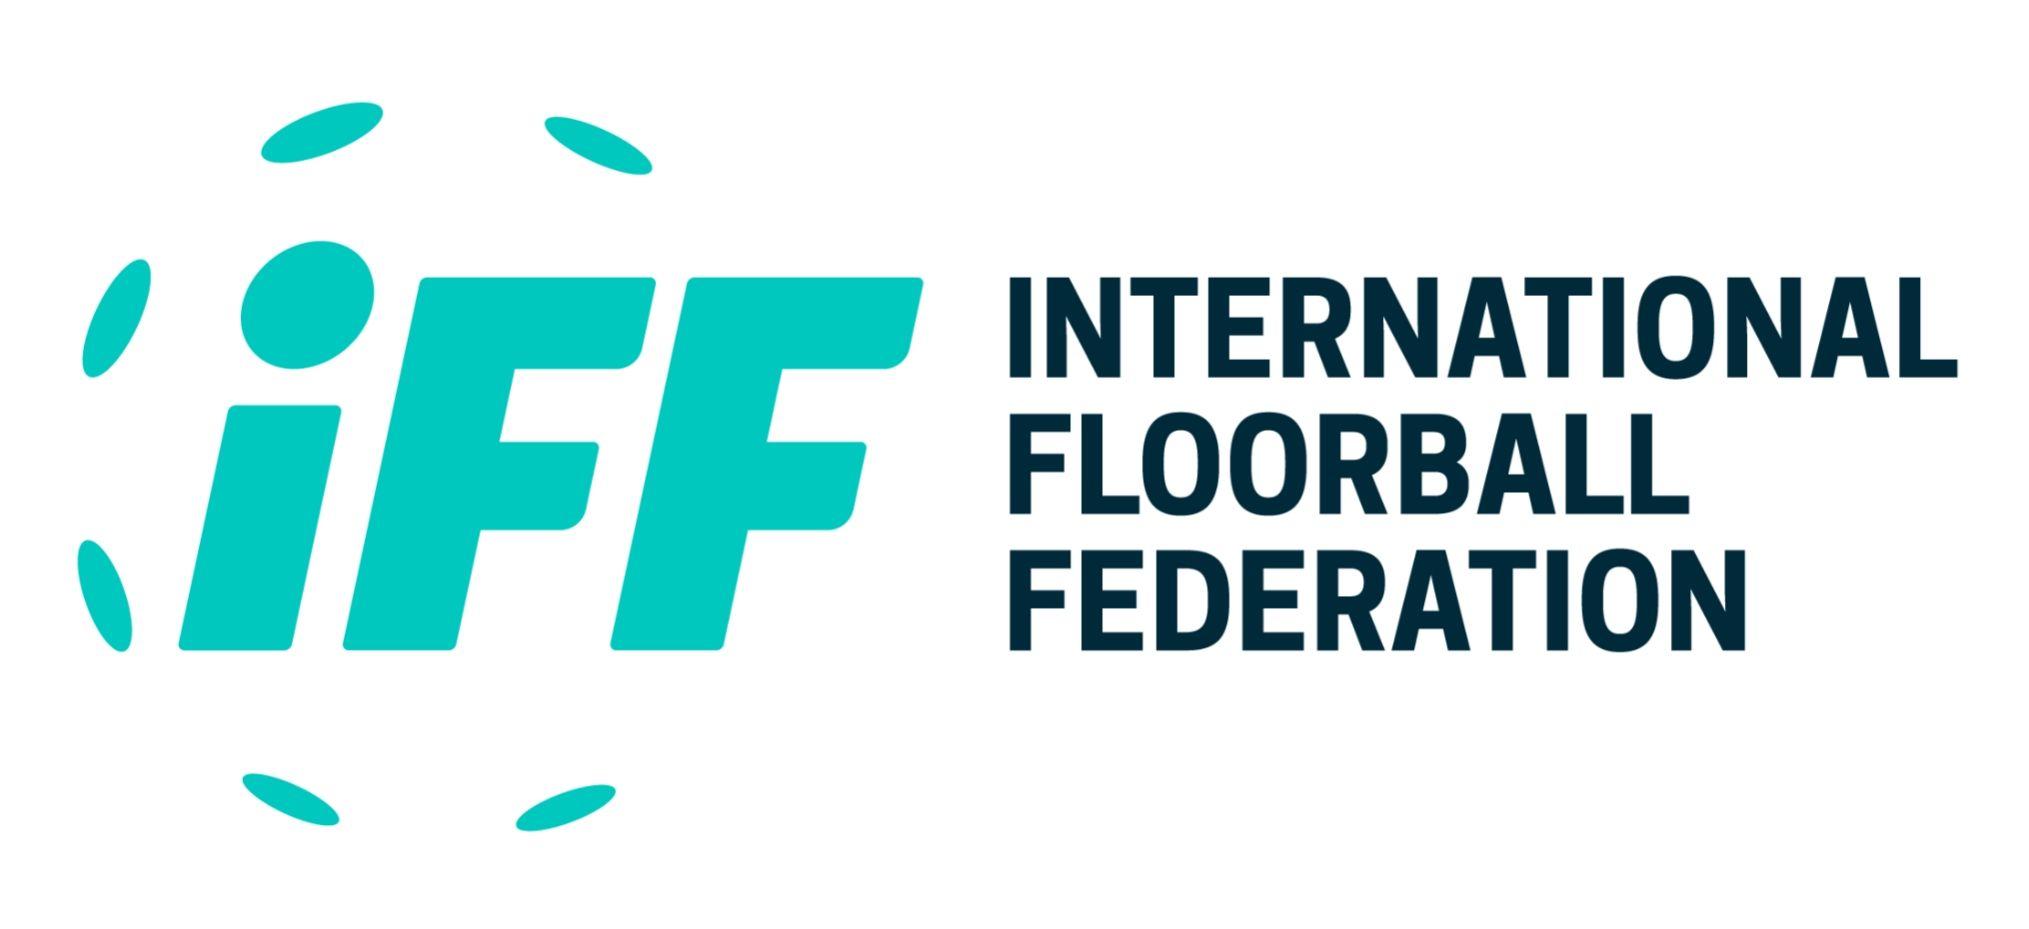 Iff Logo - IFF Logos